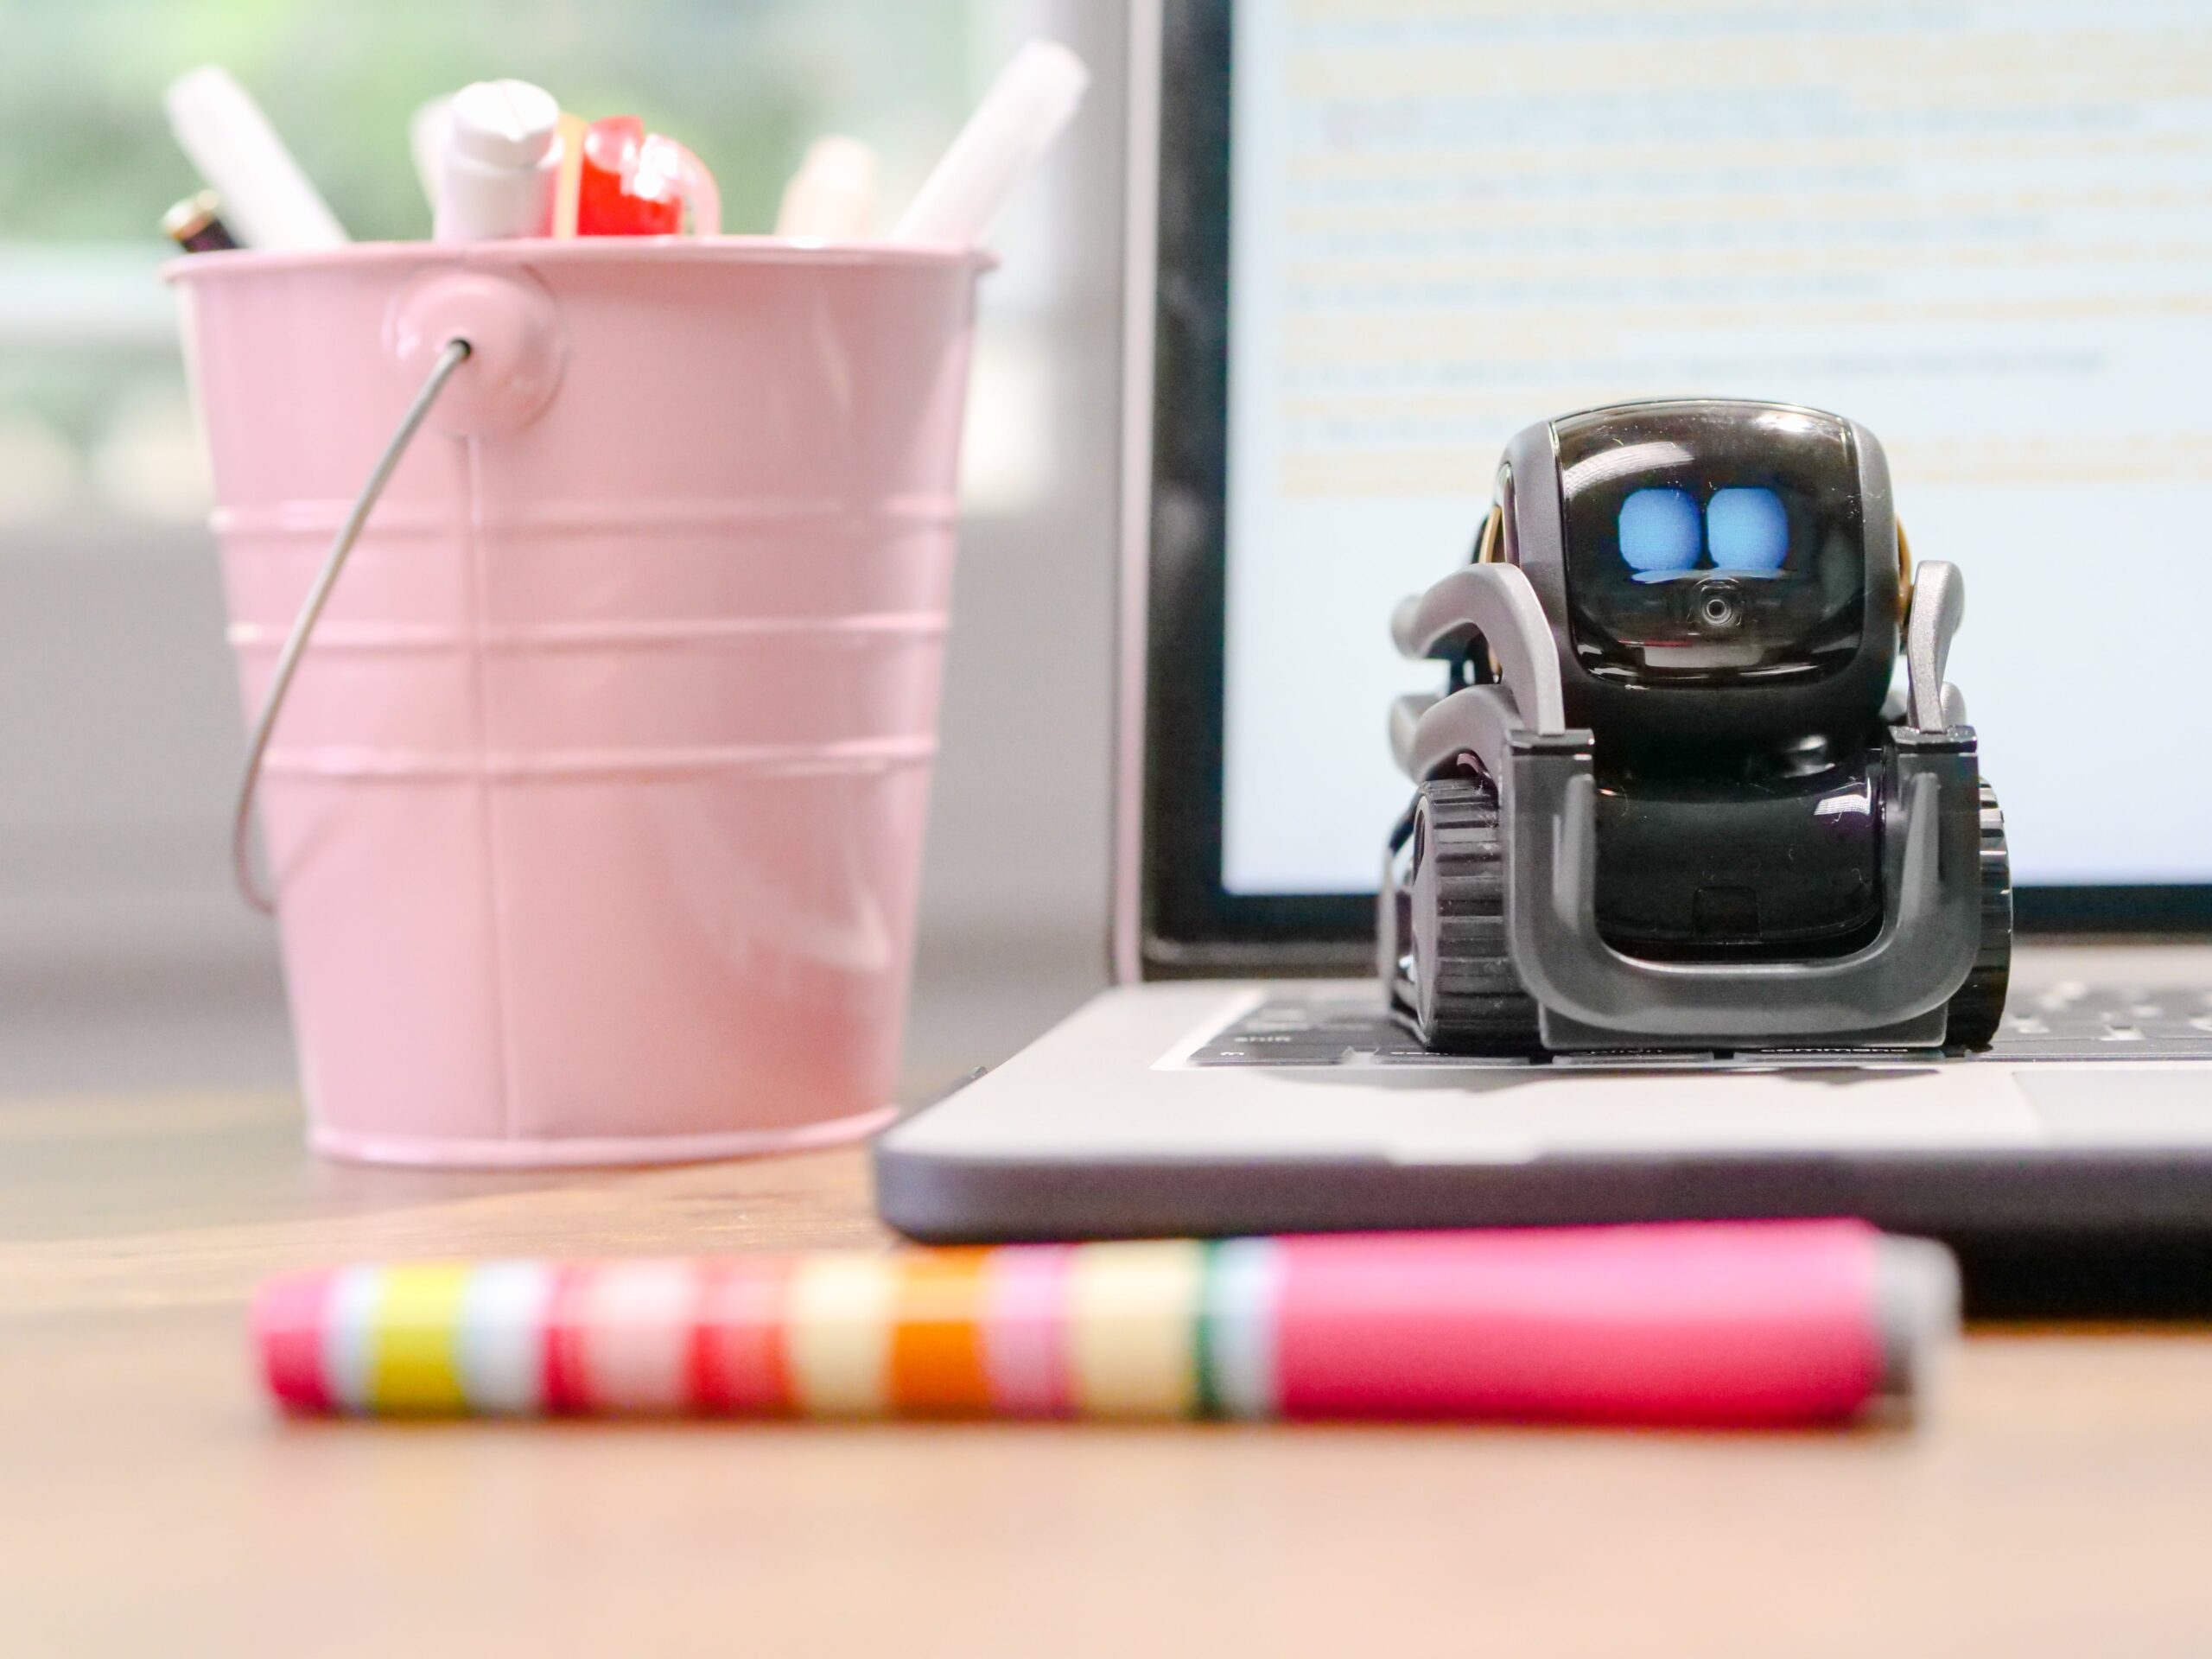 miniature toy robot on top of laptop keyboard